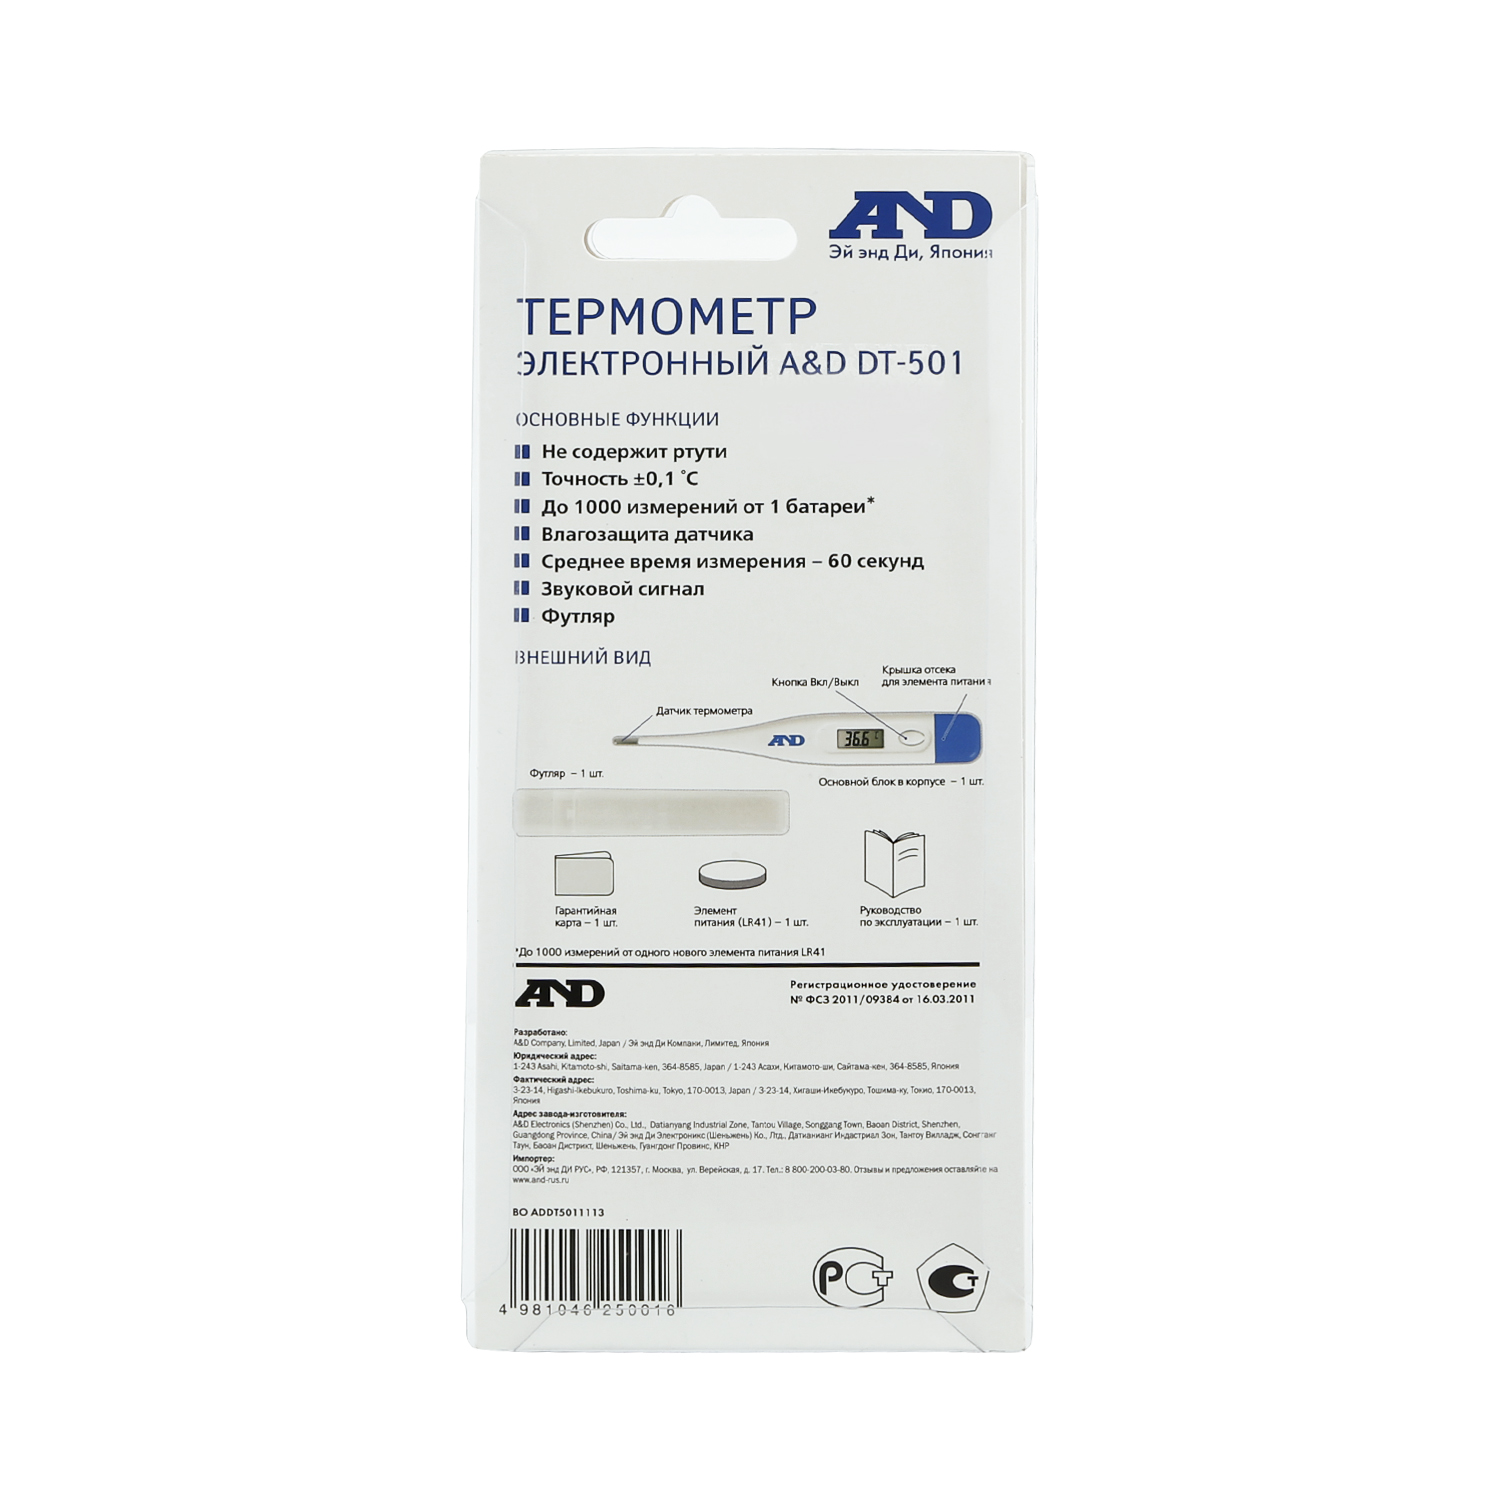 Эй энд Ди термометр DT-501 цифровой медицинский термометр цифровой and dt 501 белый синий